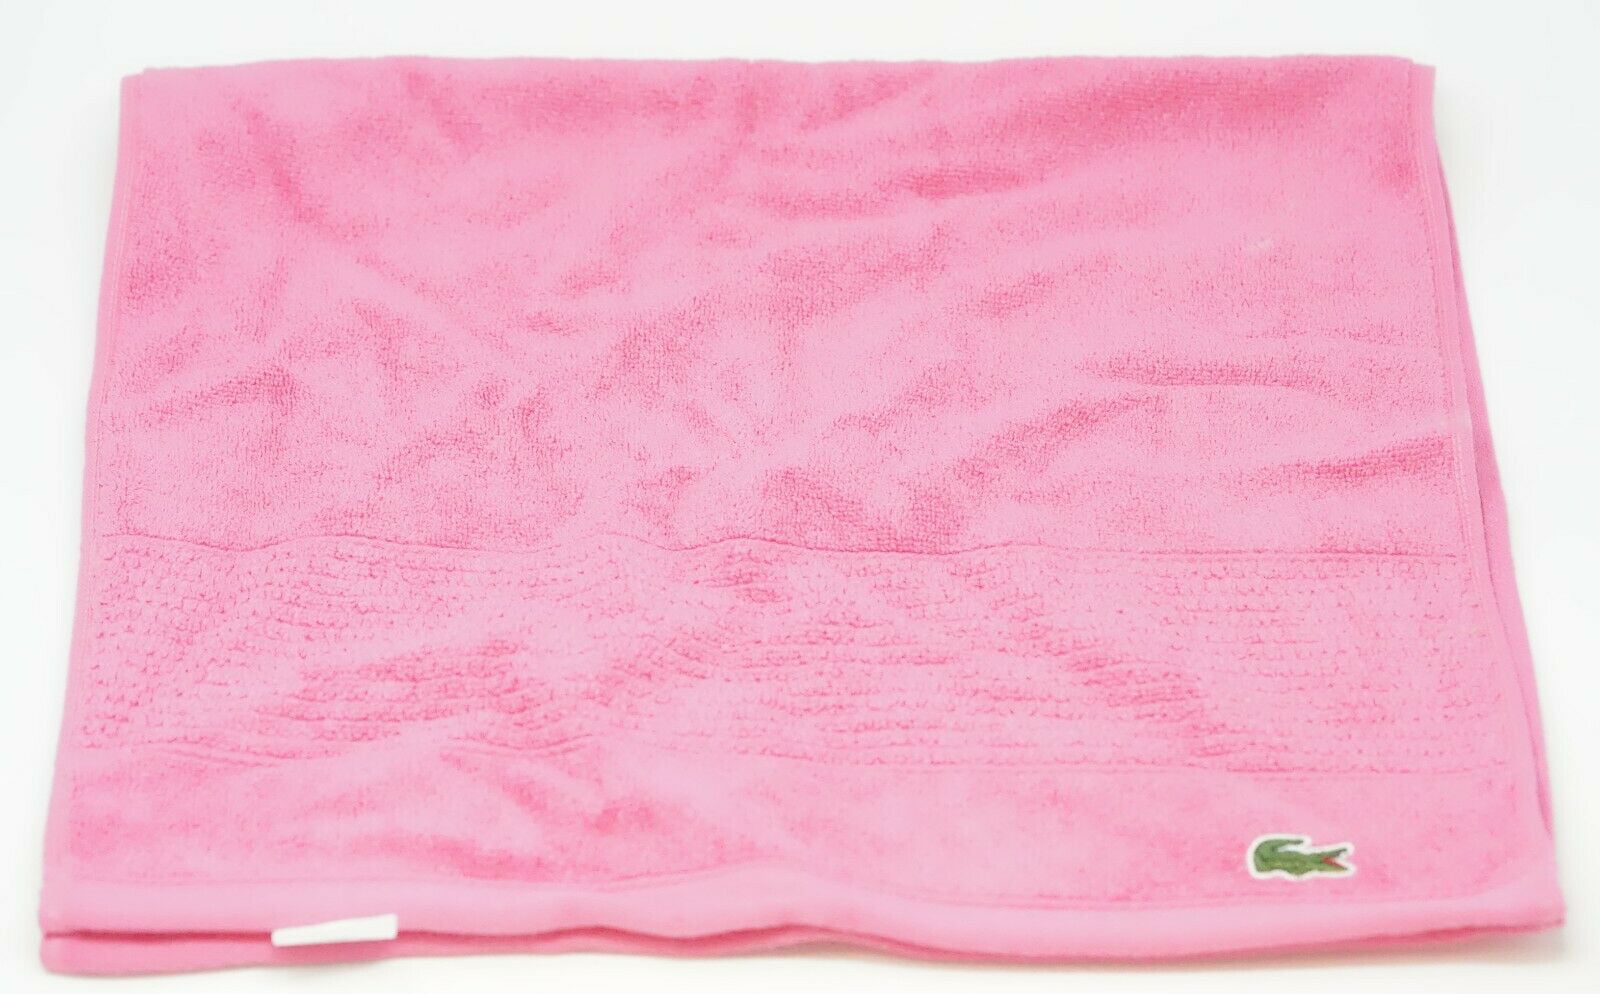 Lacoste Legend Towel, 100% Supima Cotton Loops, 650 GSM, 16x30 Hand,  Riviera Blue